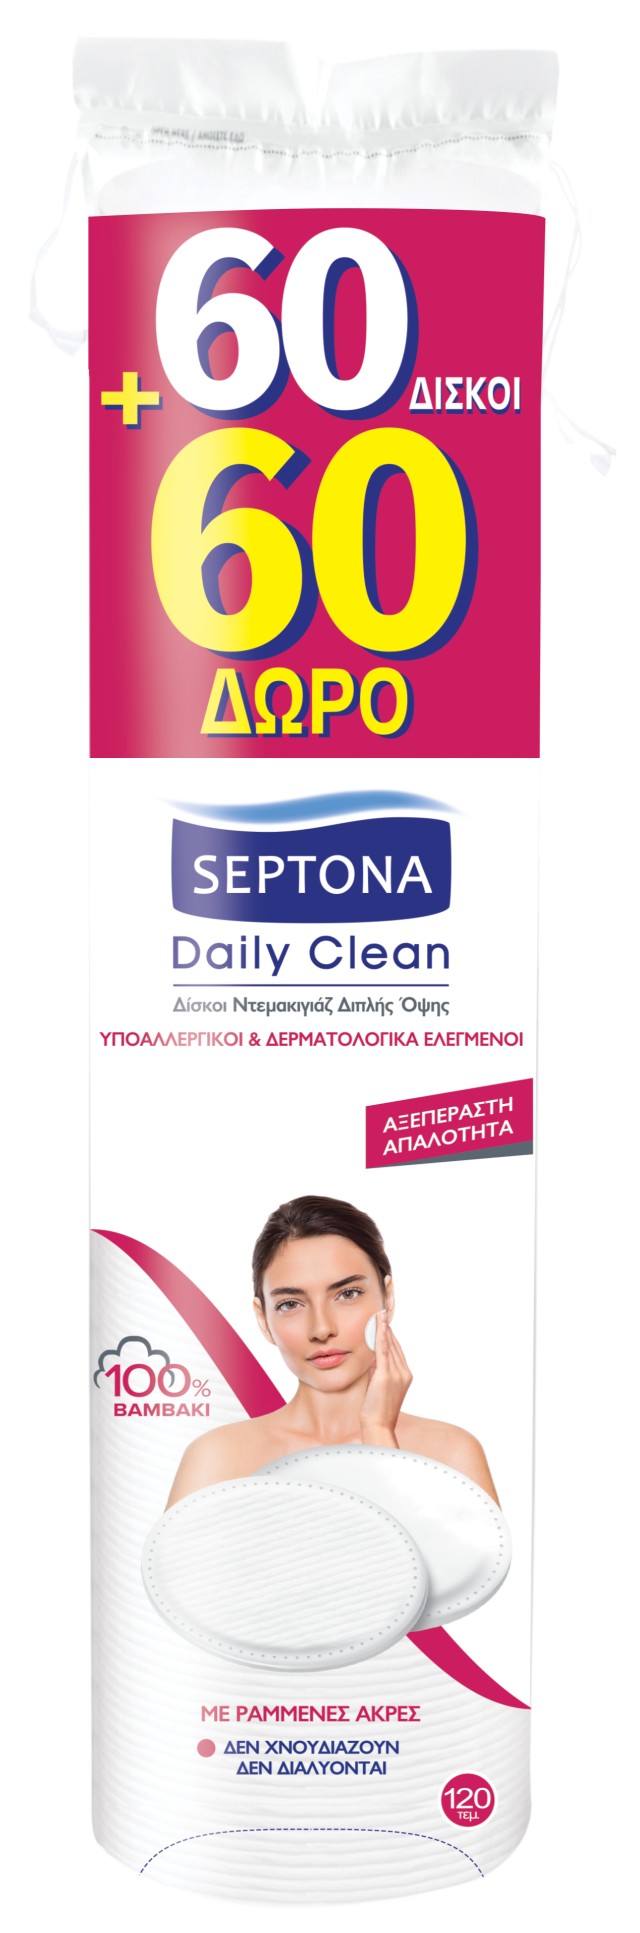 Septona Daily Clean Δίσκοι Ντεμακιγιάζ Στρογγυλοί Διπλής Όψης με Ραμμένες Άκρες 60 + Δώρο 60 Τεμάχια